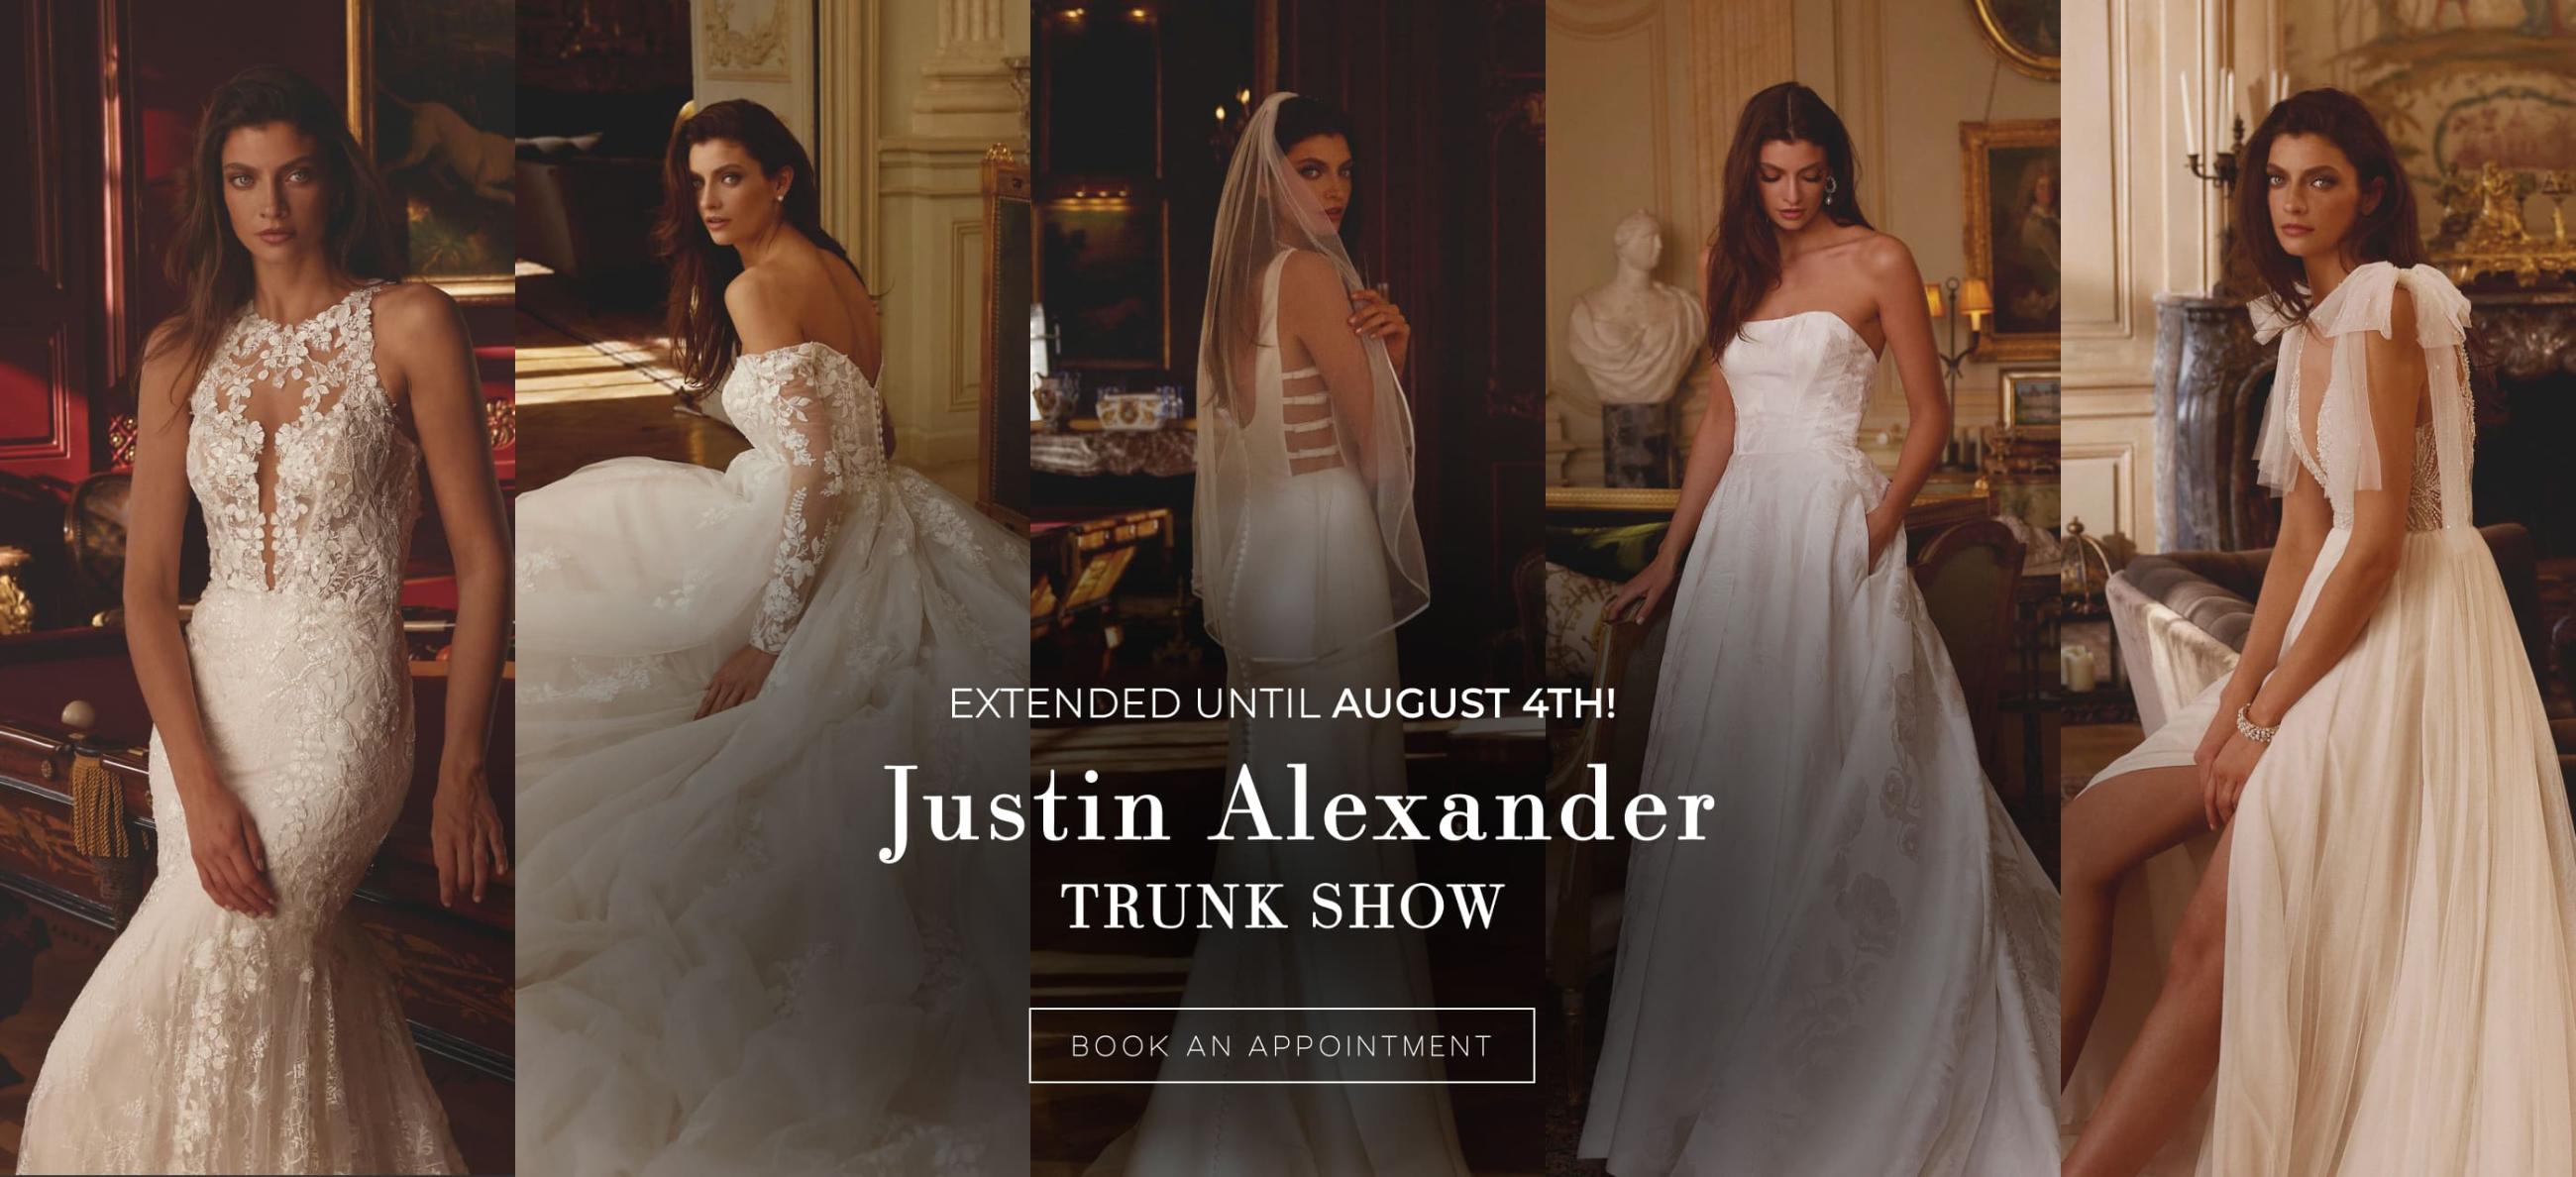 Justin Alexander Trunk Show August 4th - banner for desktop